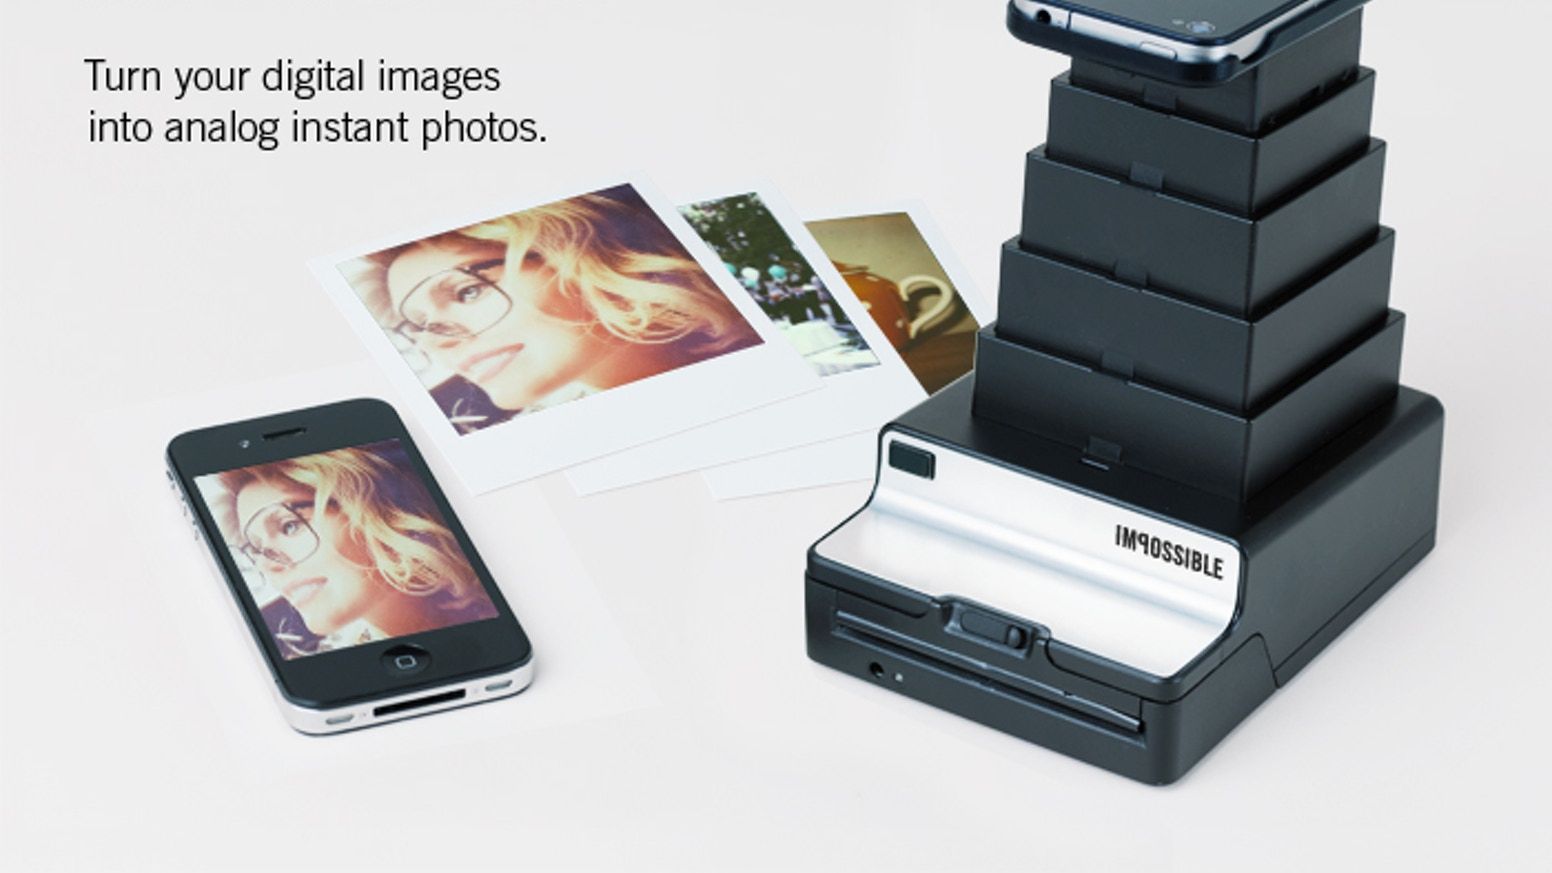 Polaroid Lab: phone photography and instant polaroid photos